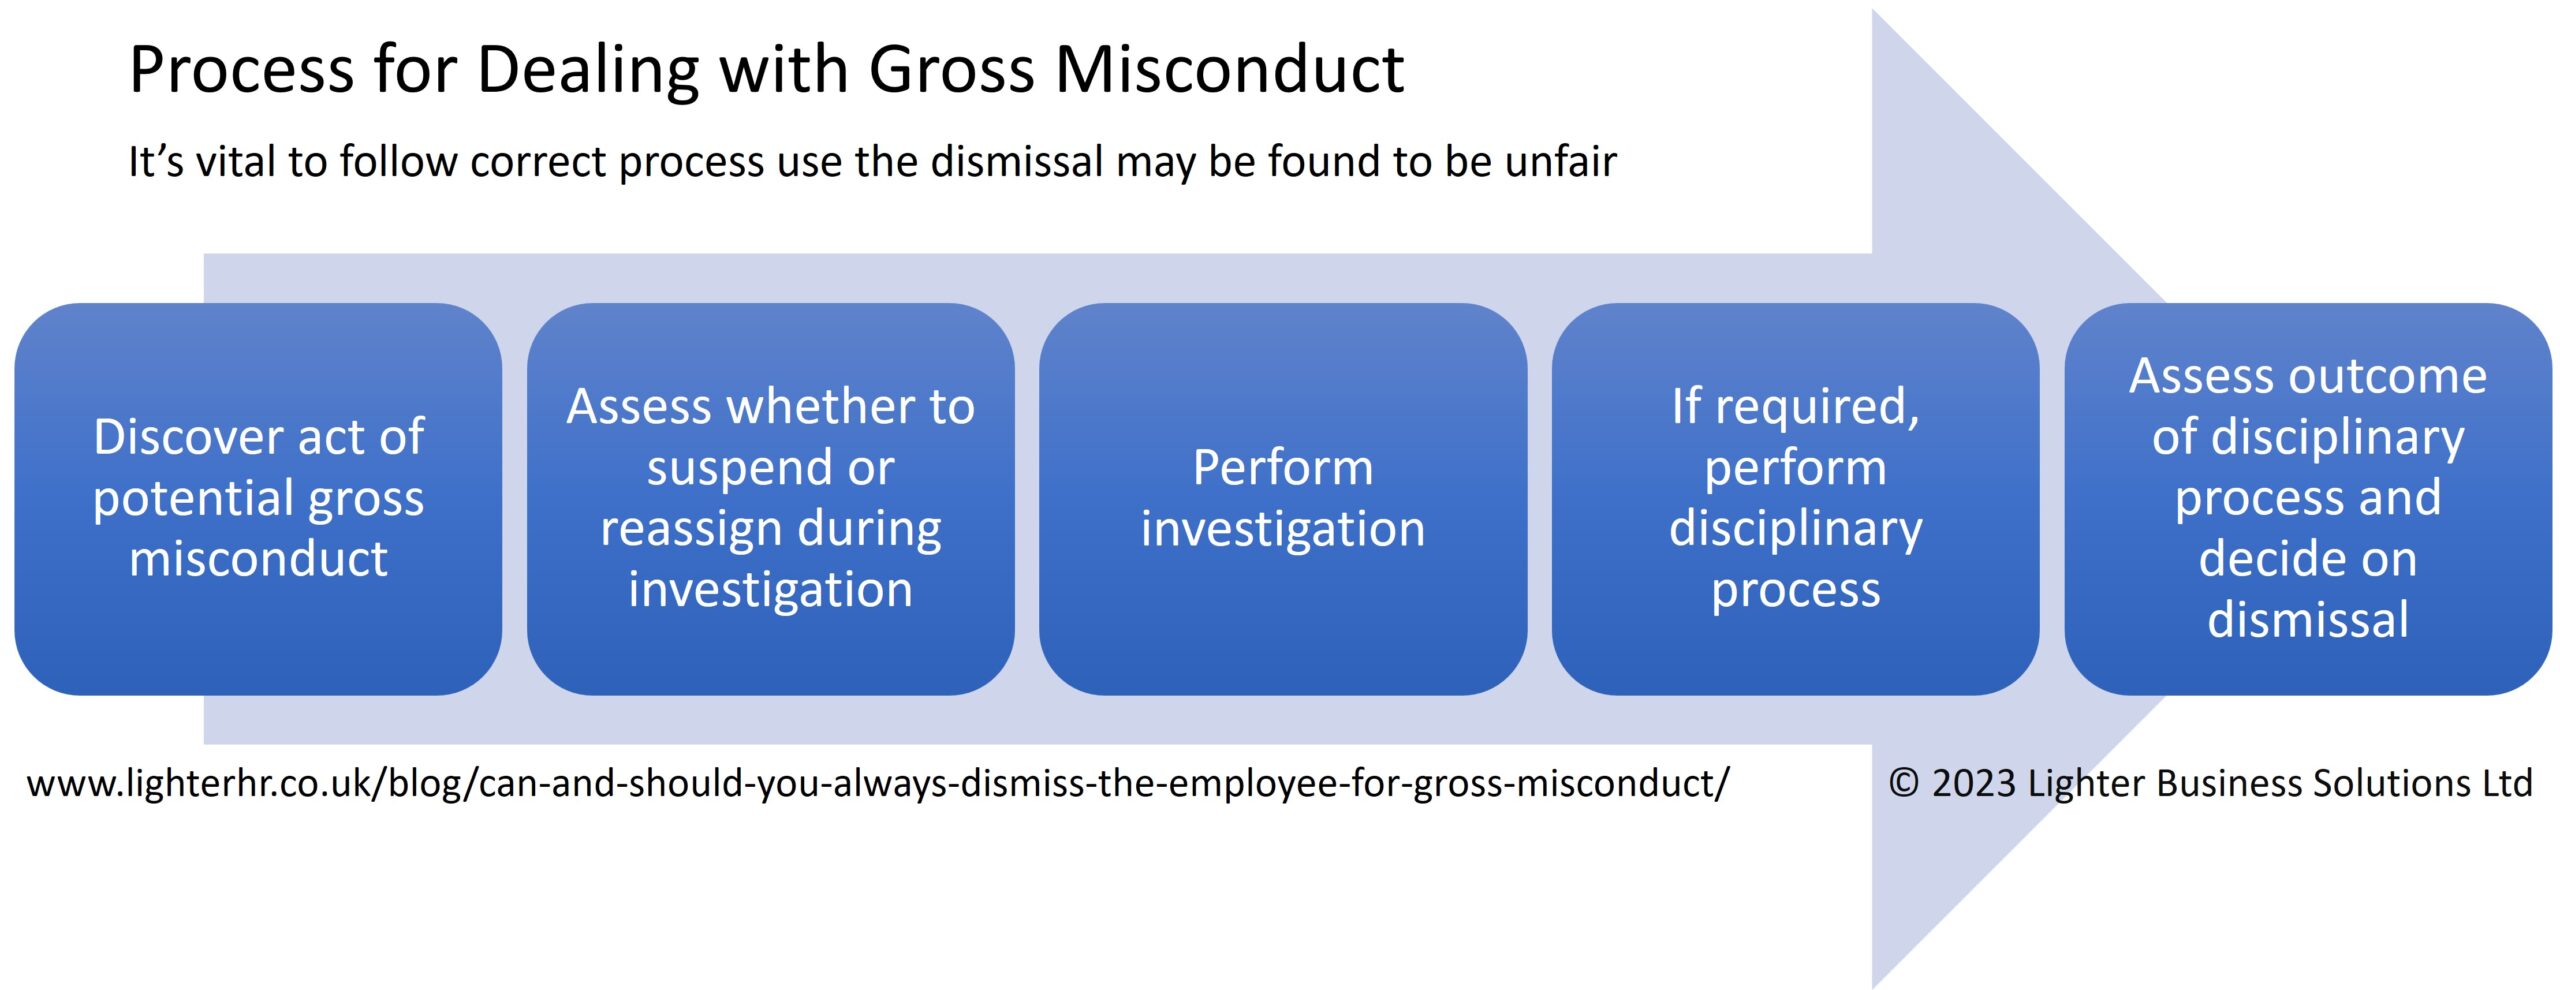 Process for Dealing with Gross Misconduct - LighterHR